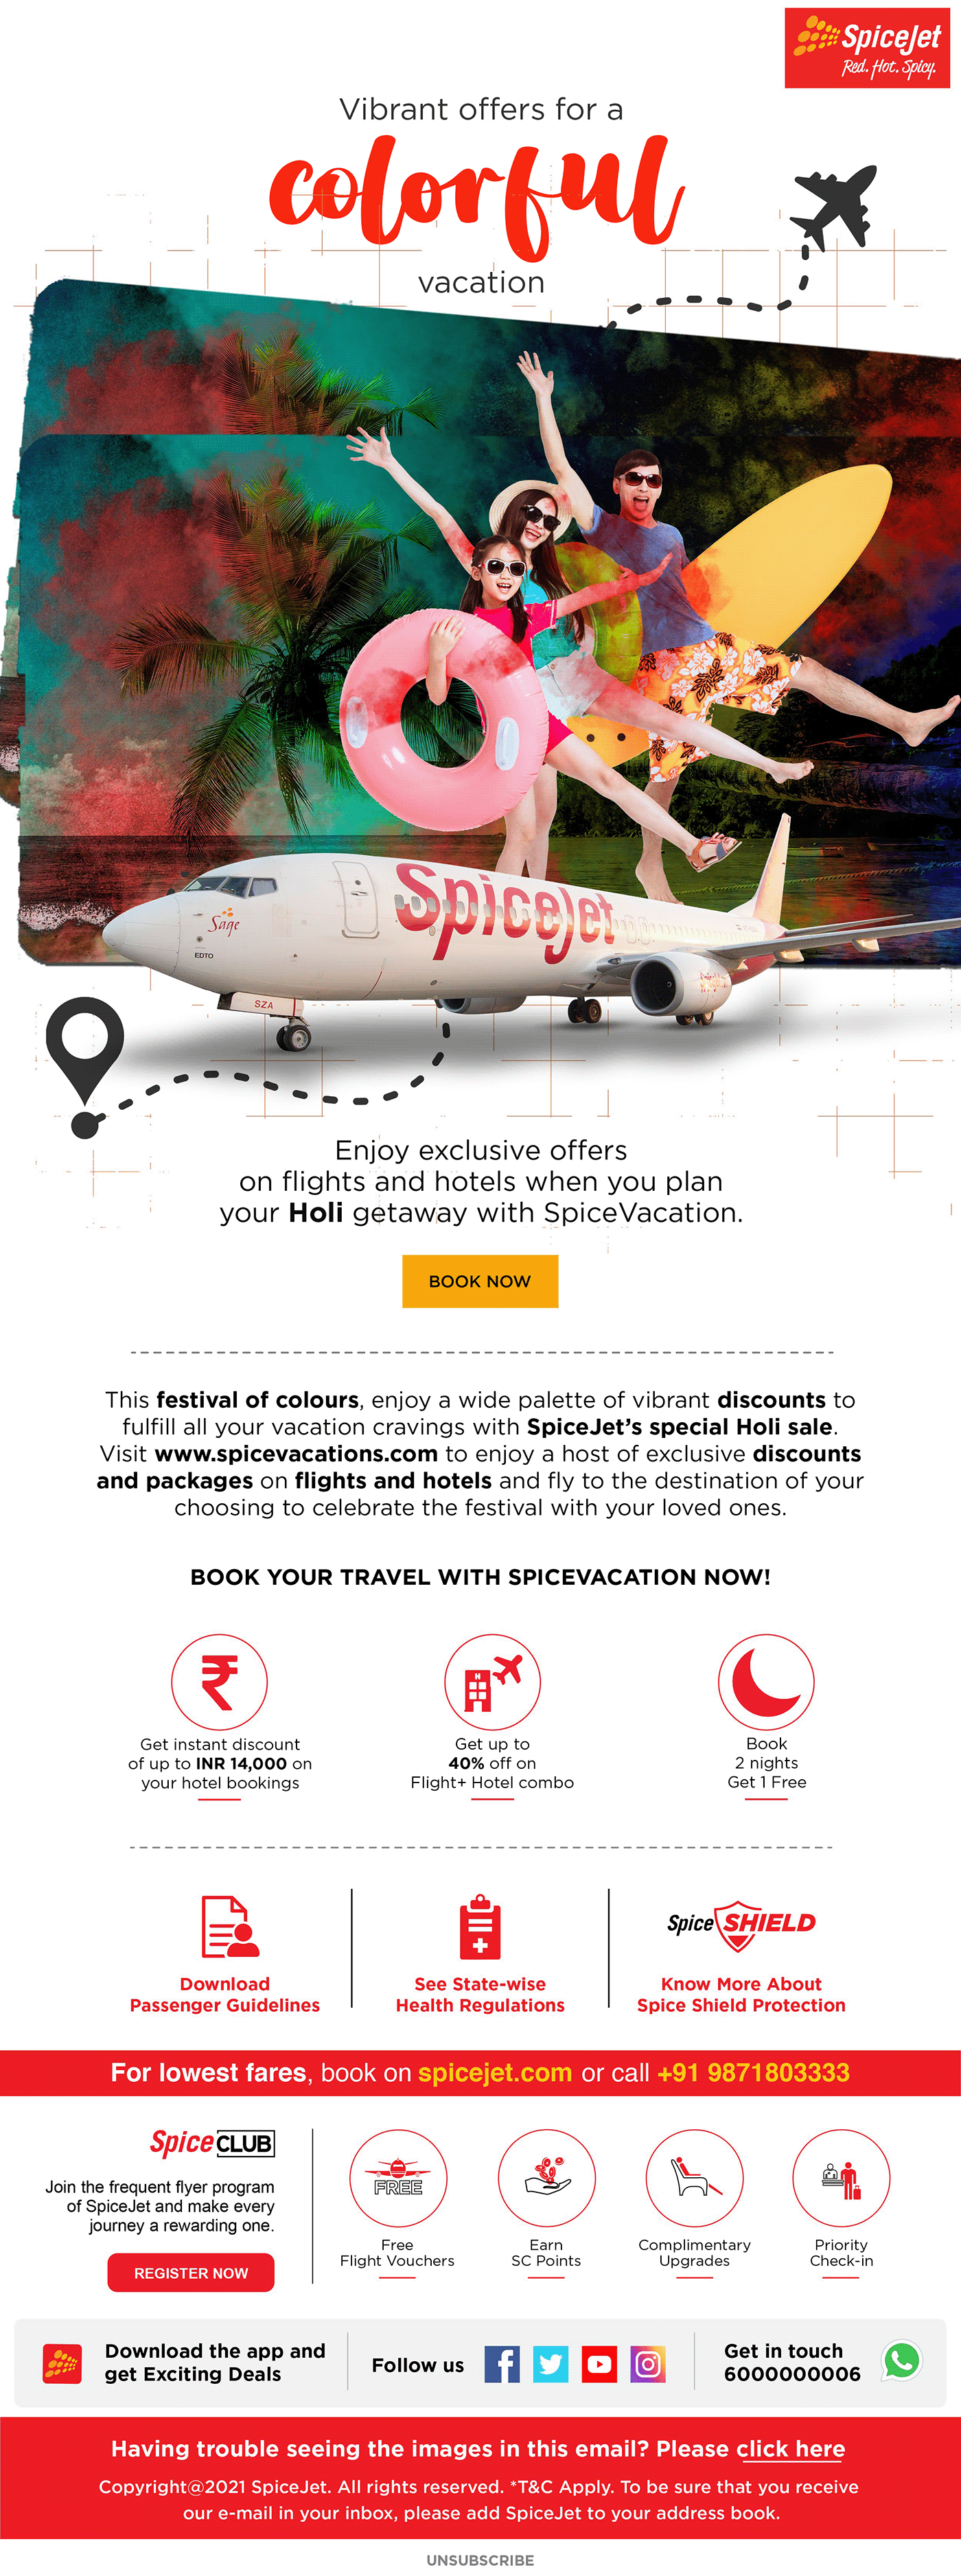 email marketing Emailer flight marketing   spicejet   Travel